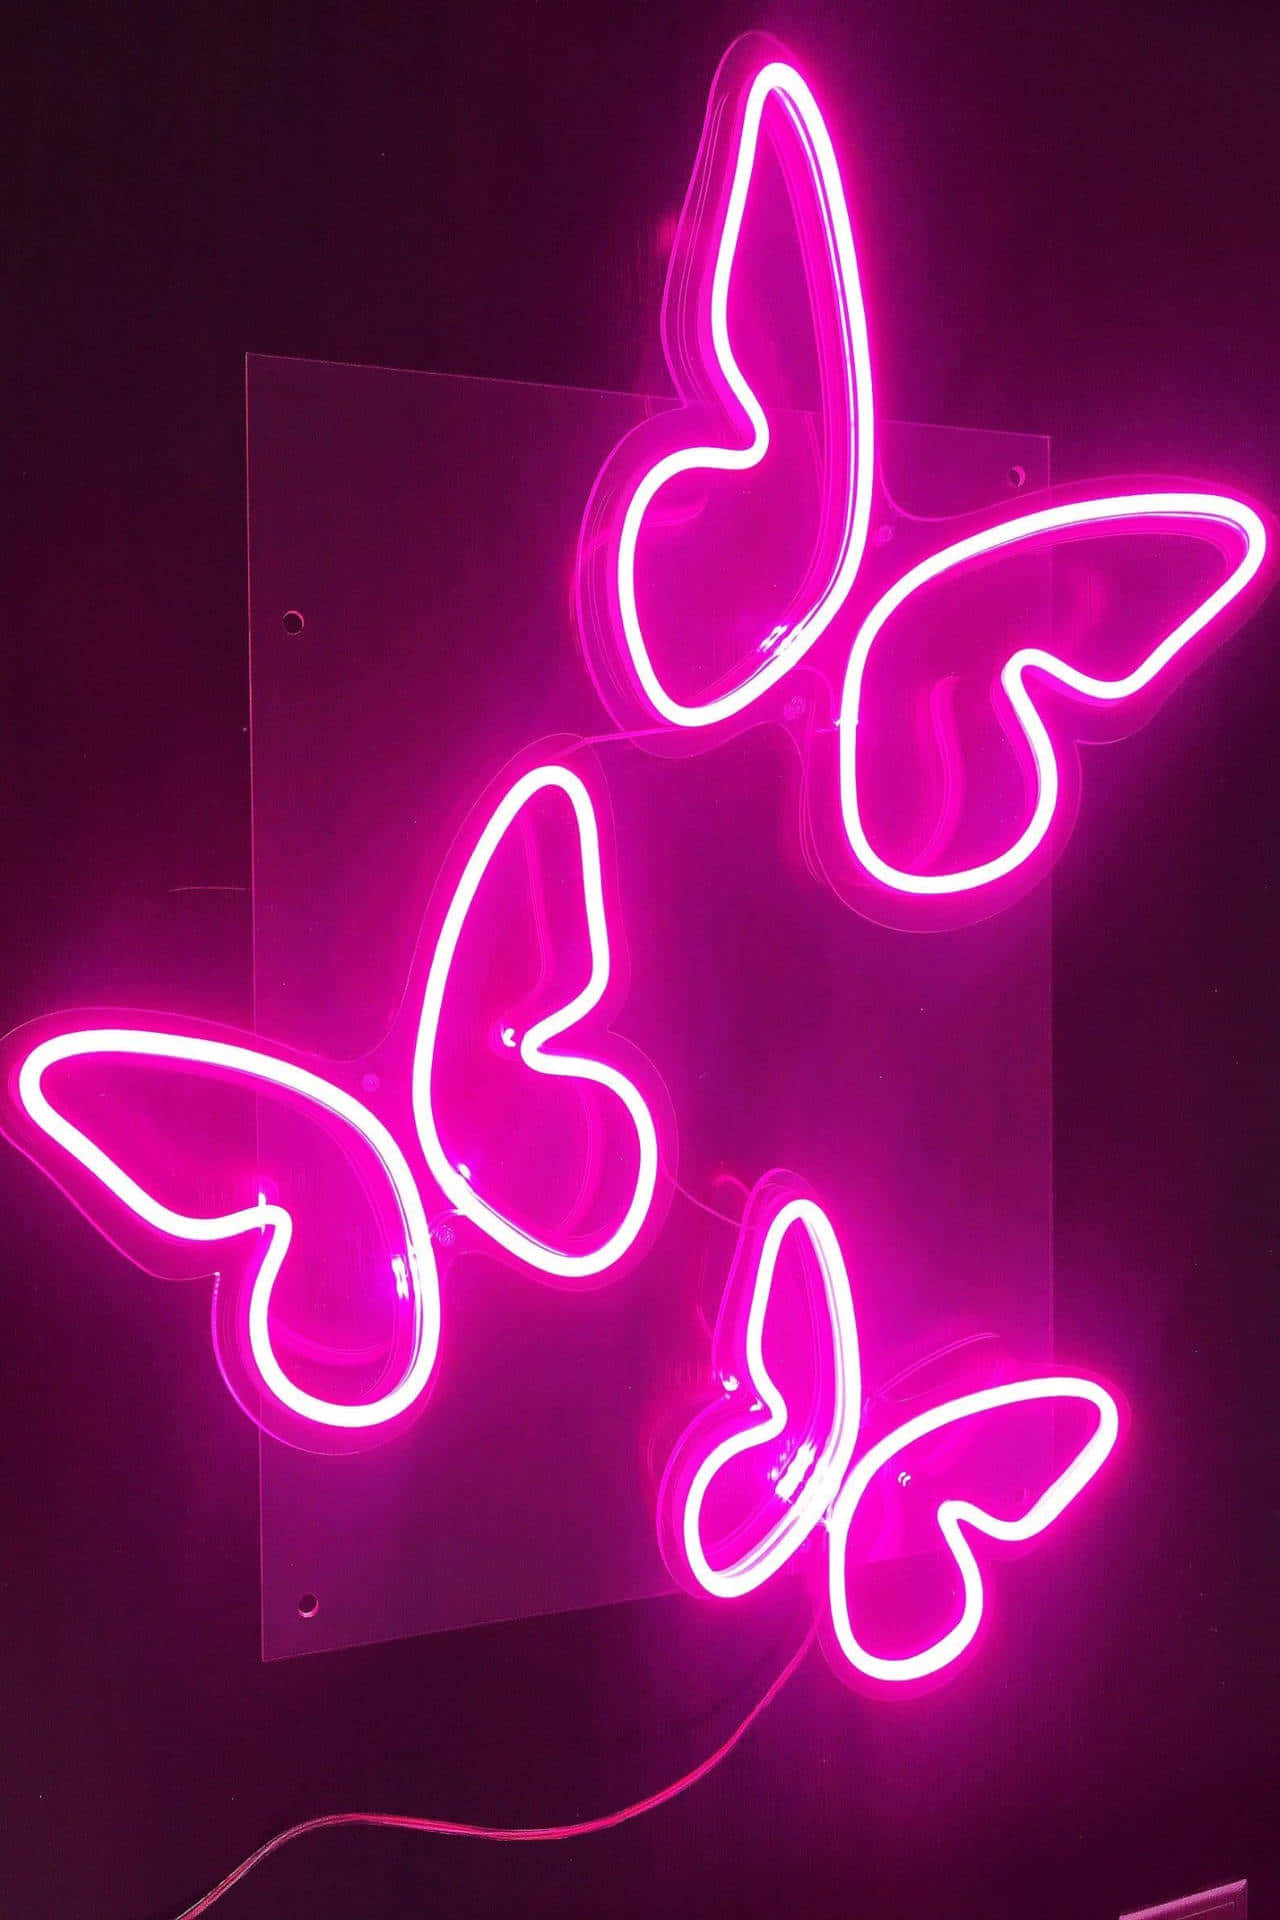 Imagende Mariposas Rosadas Estéticas En Neon